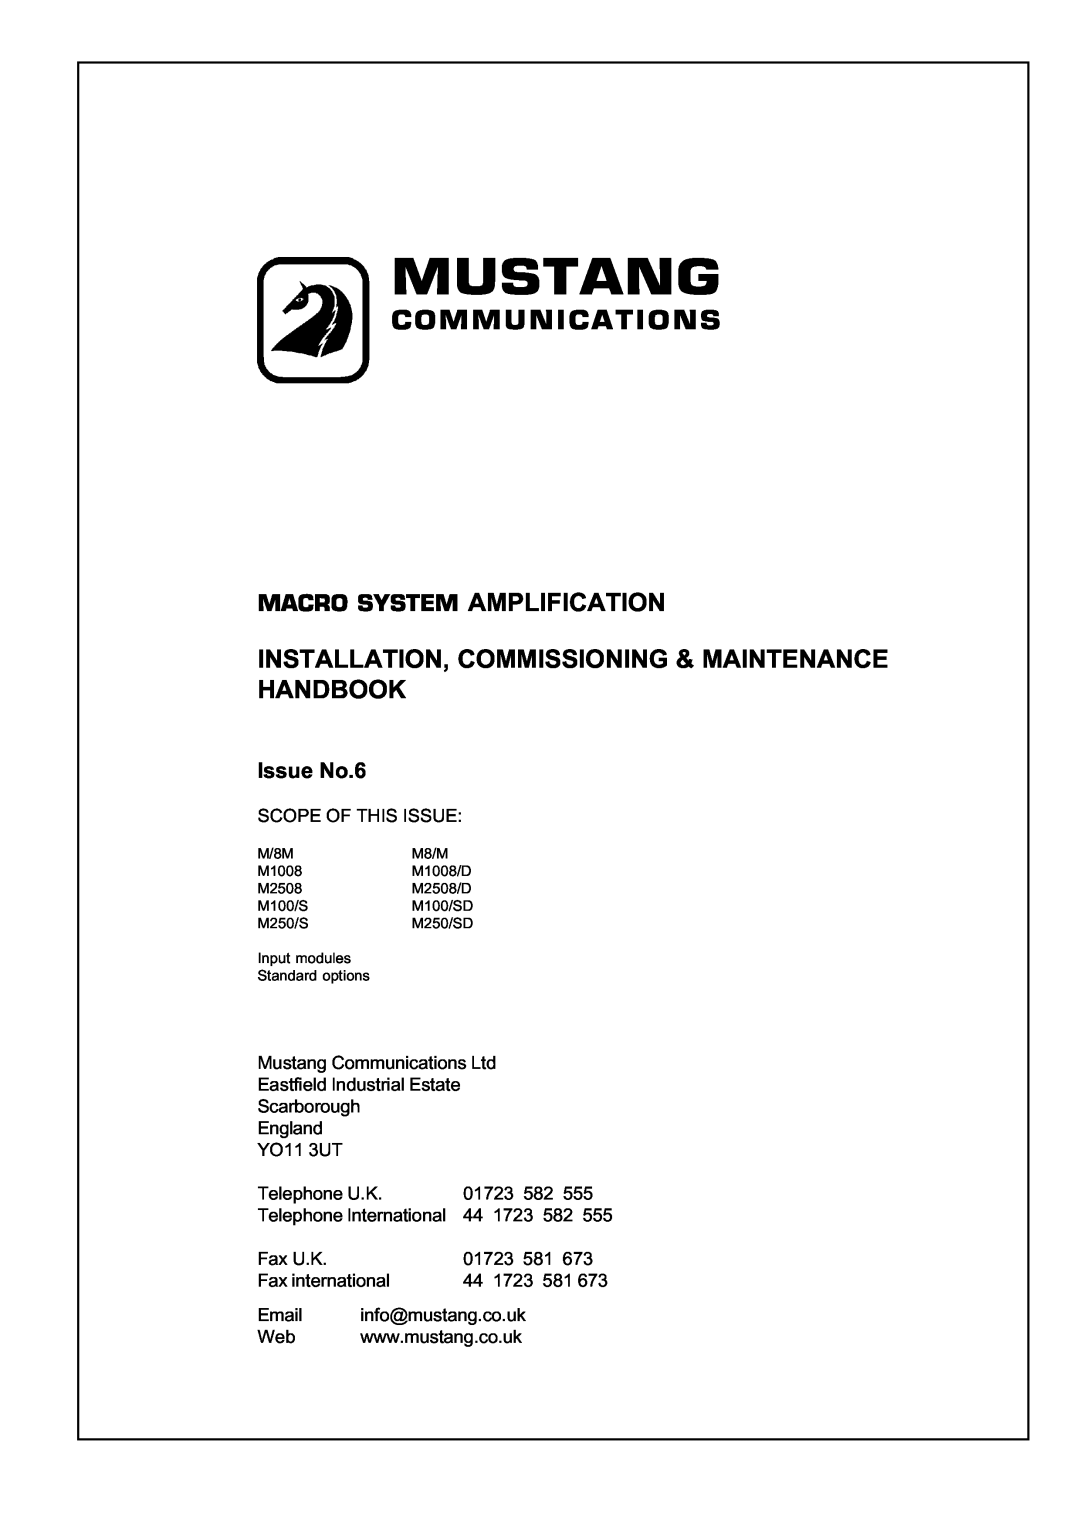 Mustang M/8M, M2508/D, M100/SD, M250/S, M1008 manual Issue No.6, Mustang, Communications, Macro System Amplification 